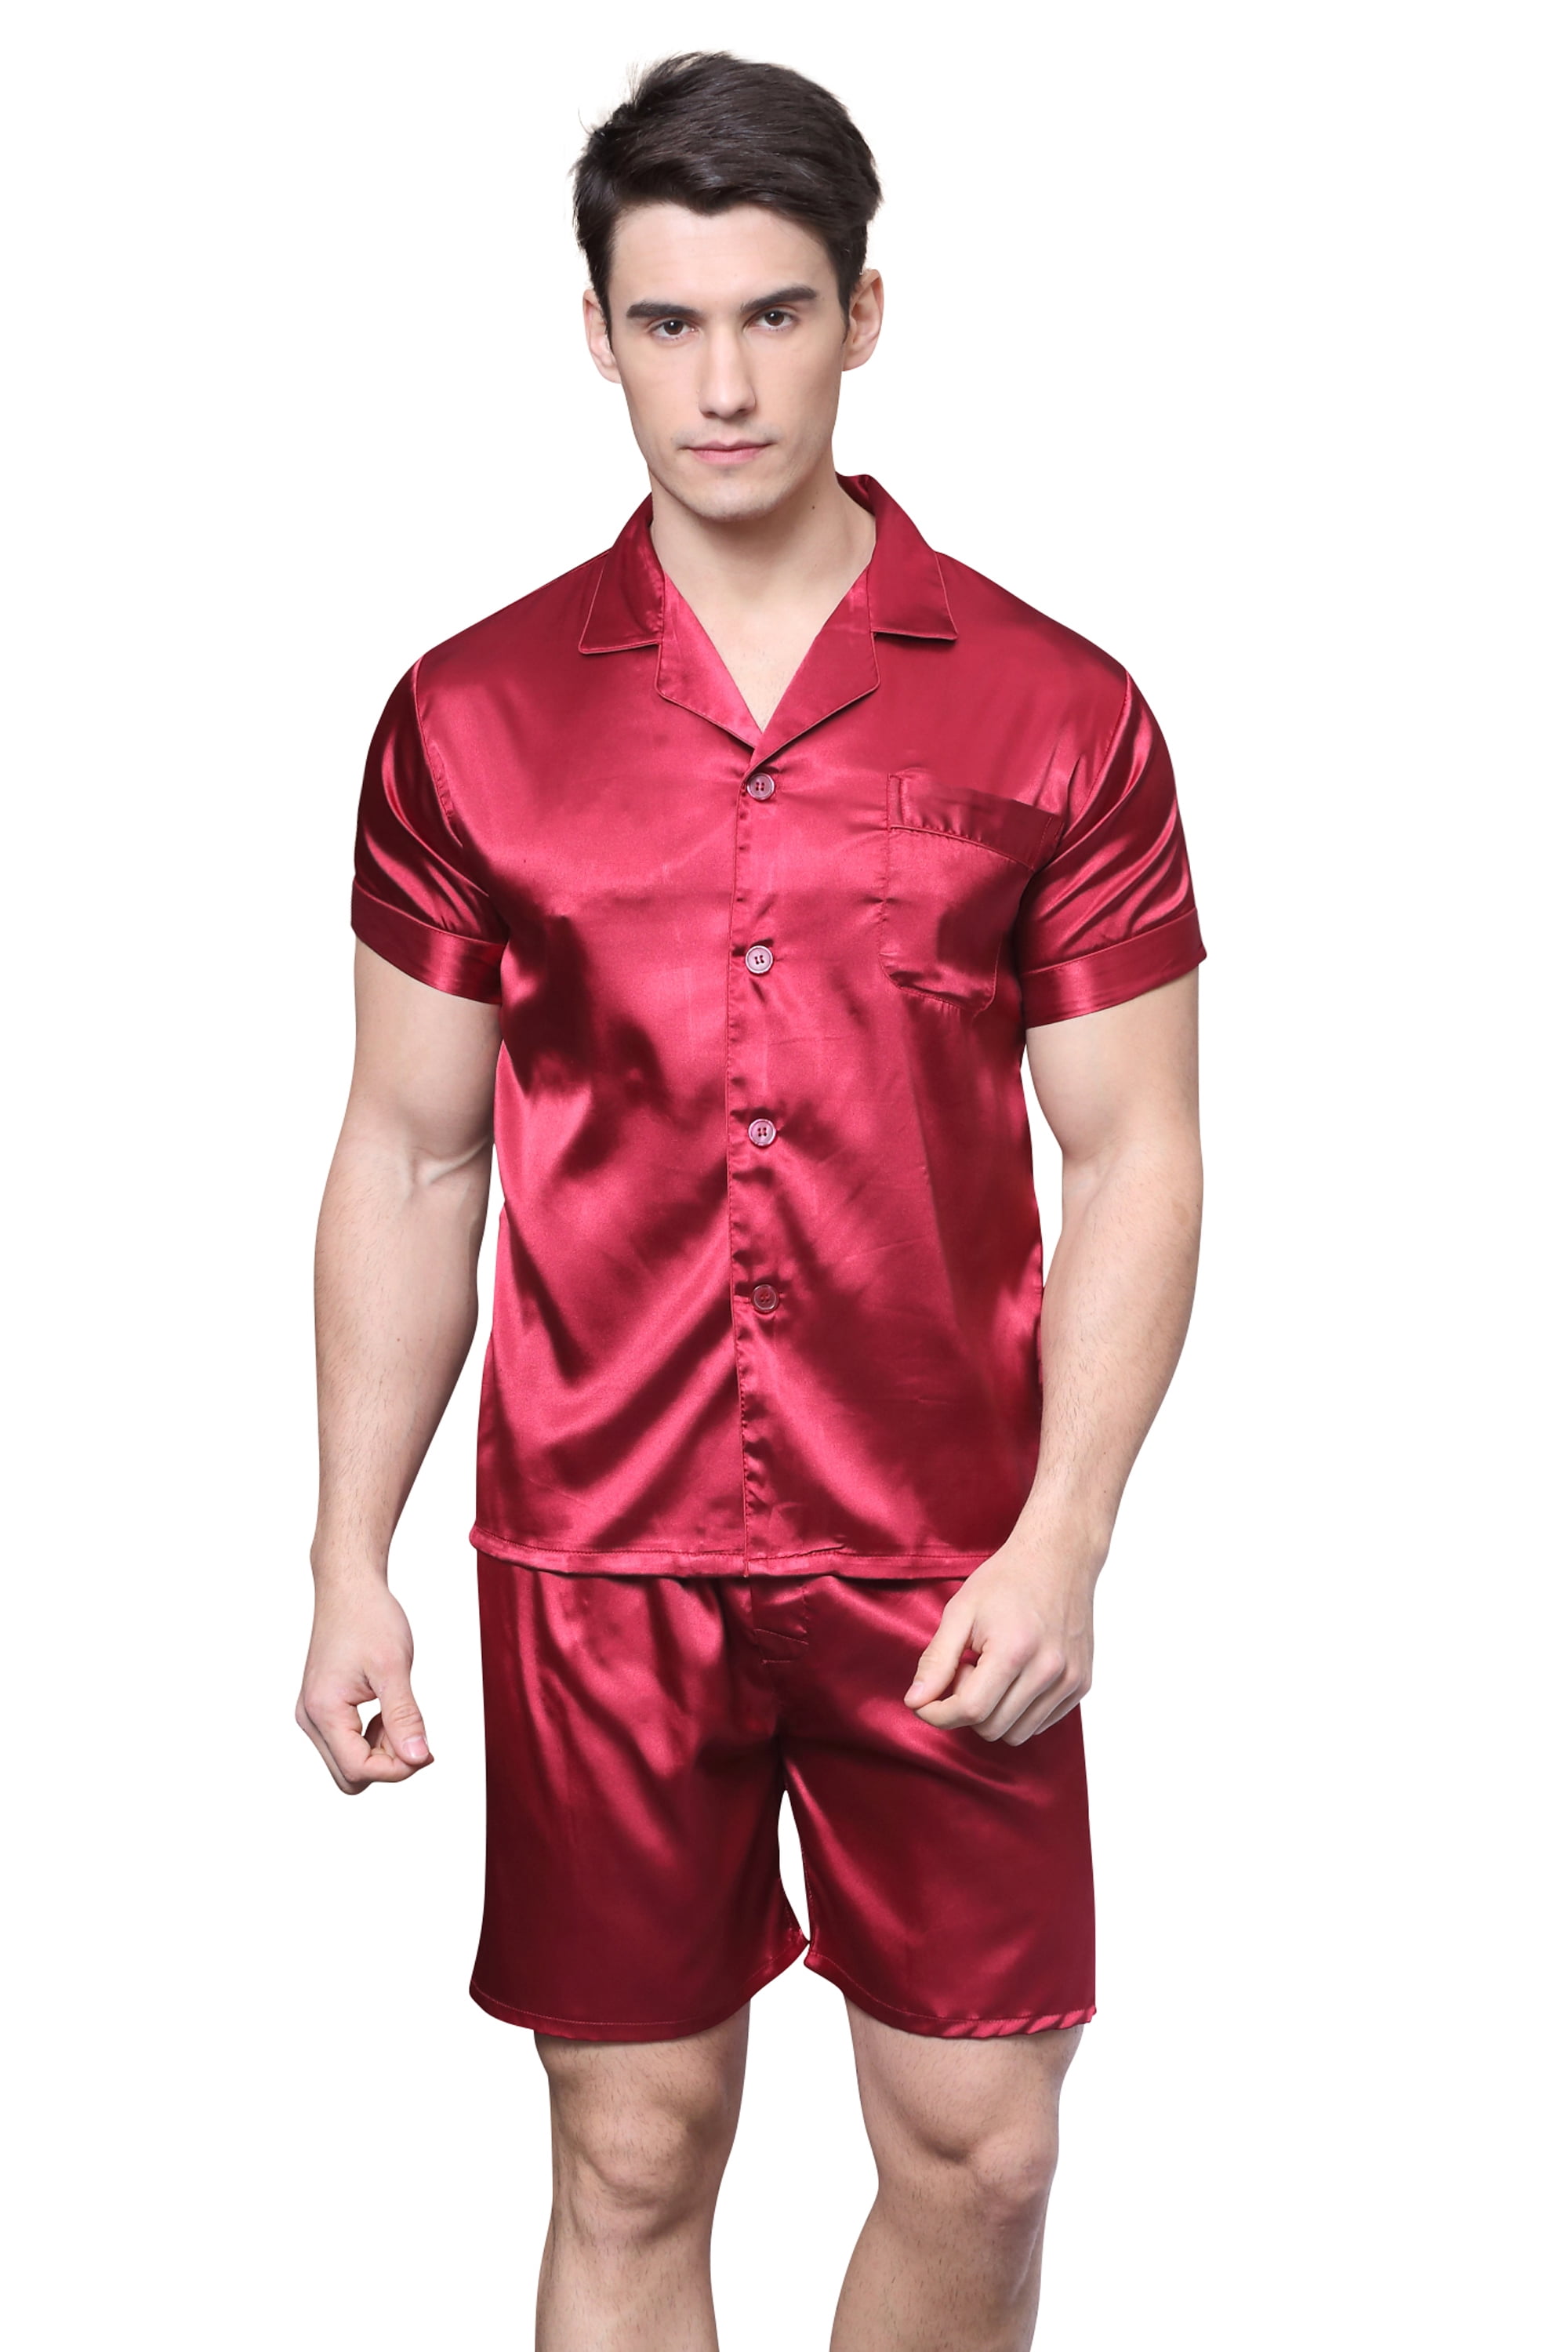 TONY AND CANDICE Men's Short Sleeve Satin Pajama Set with Shorts